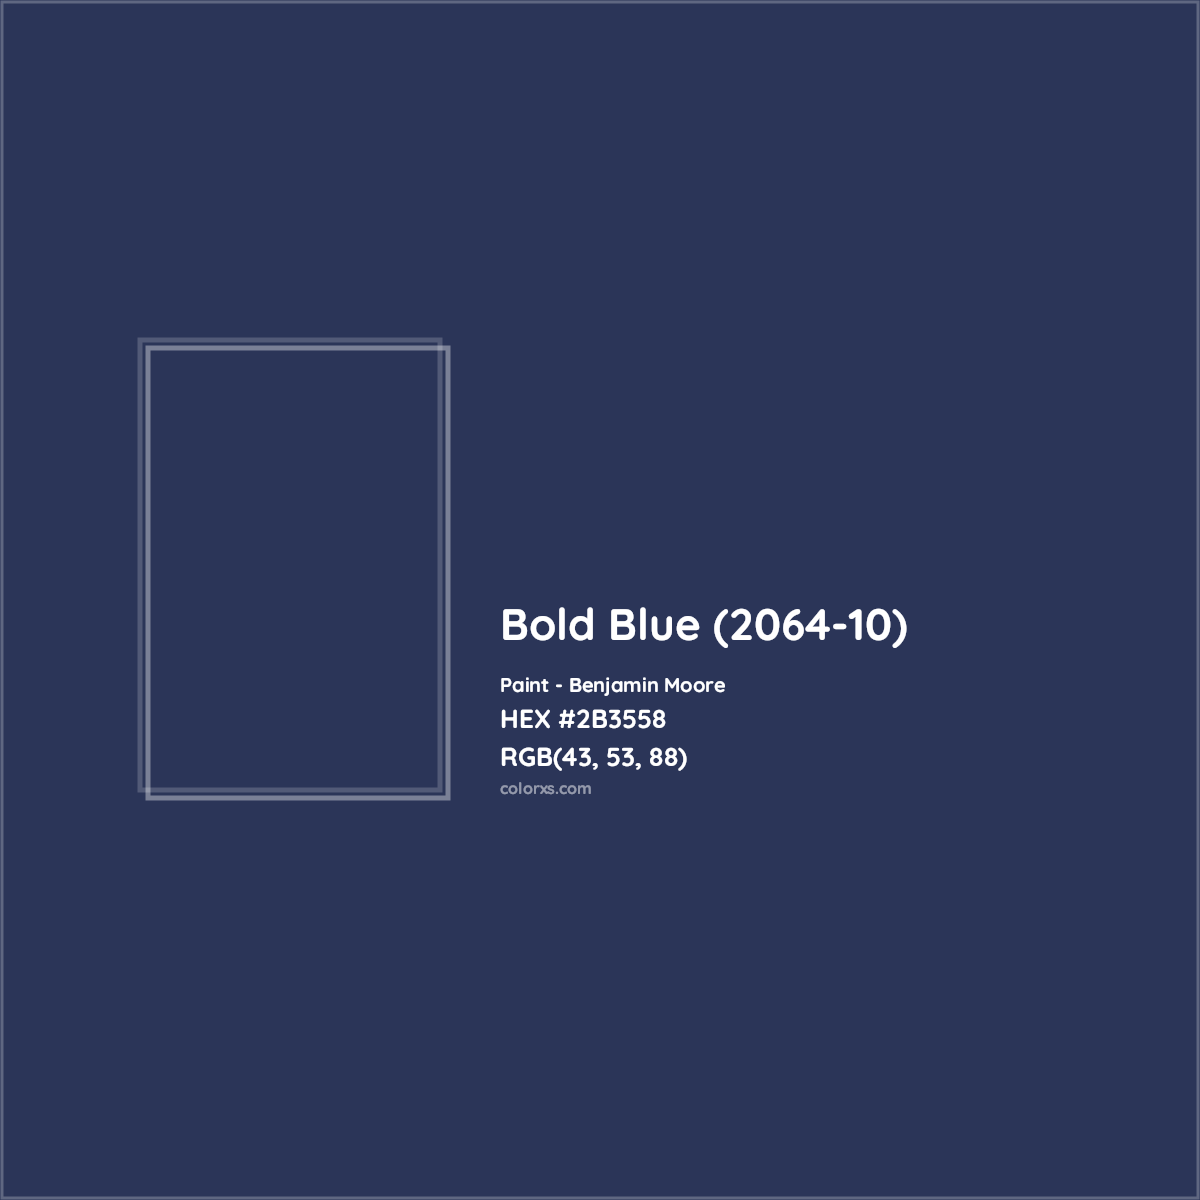 HEX #2B3558 Bold Blue (2064-10) Paint Benjamin Moore - Color Code